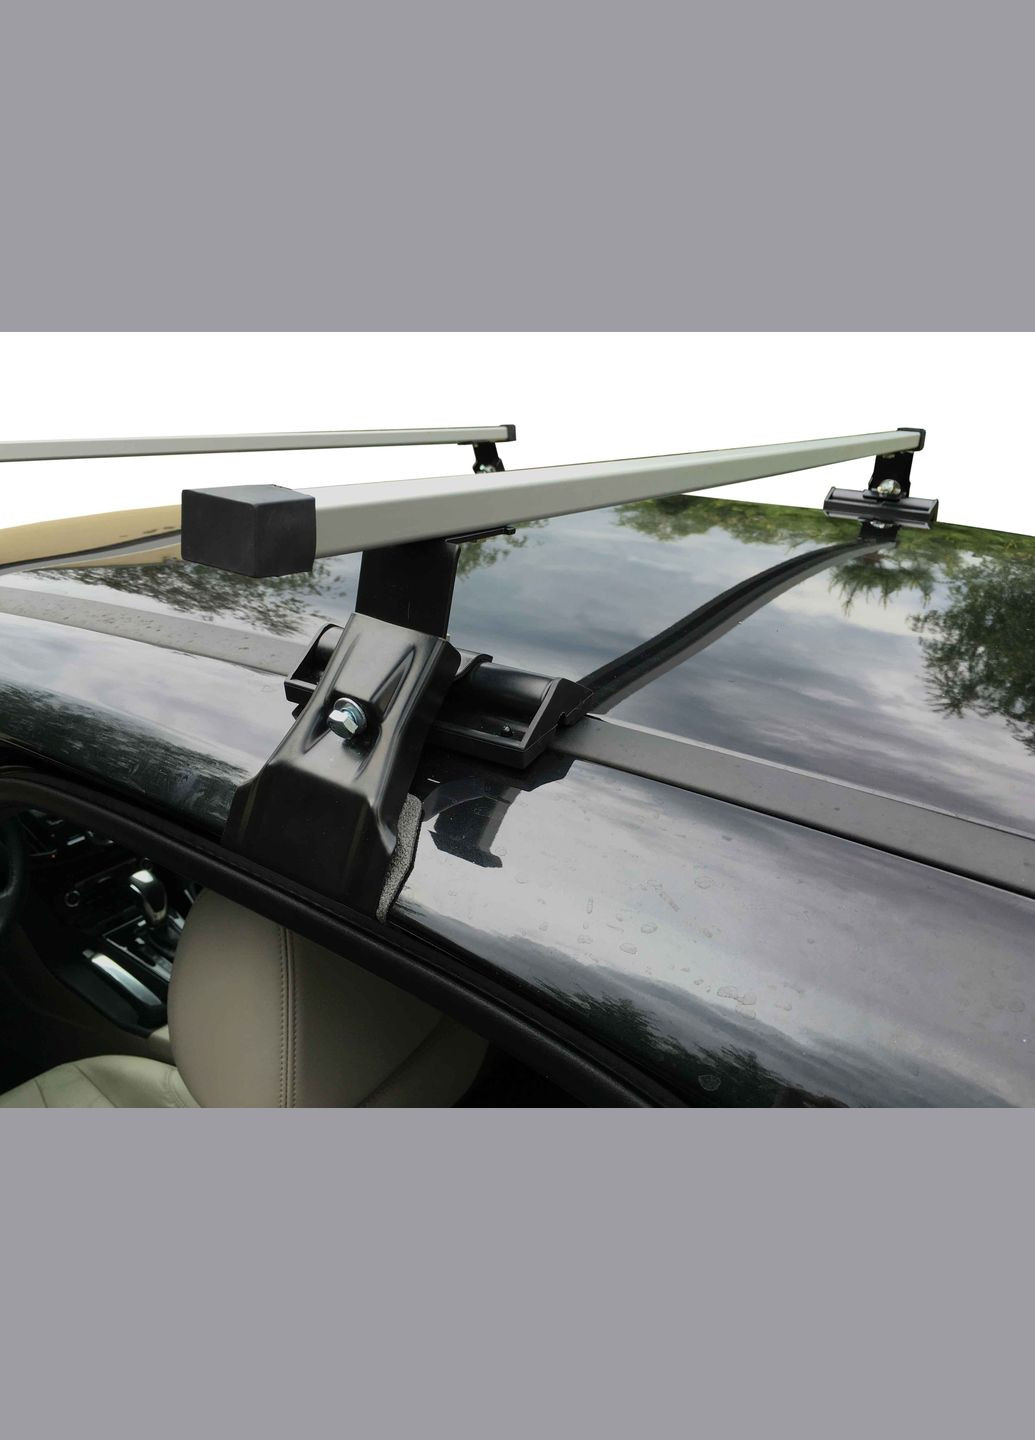 Багажник на гладкую крышу Volkswagen Golf 2008 Lux CamelL-120-1797 Kenguru (294181377)